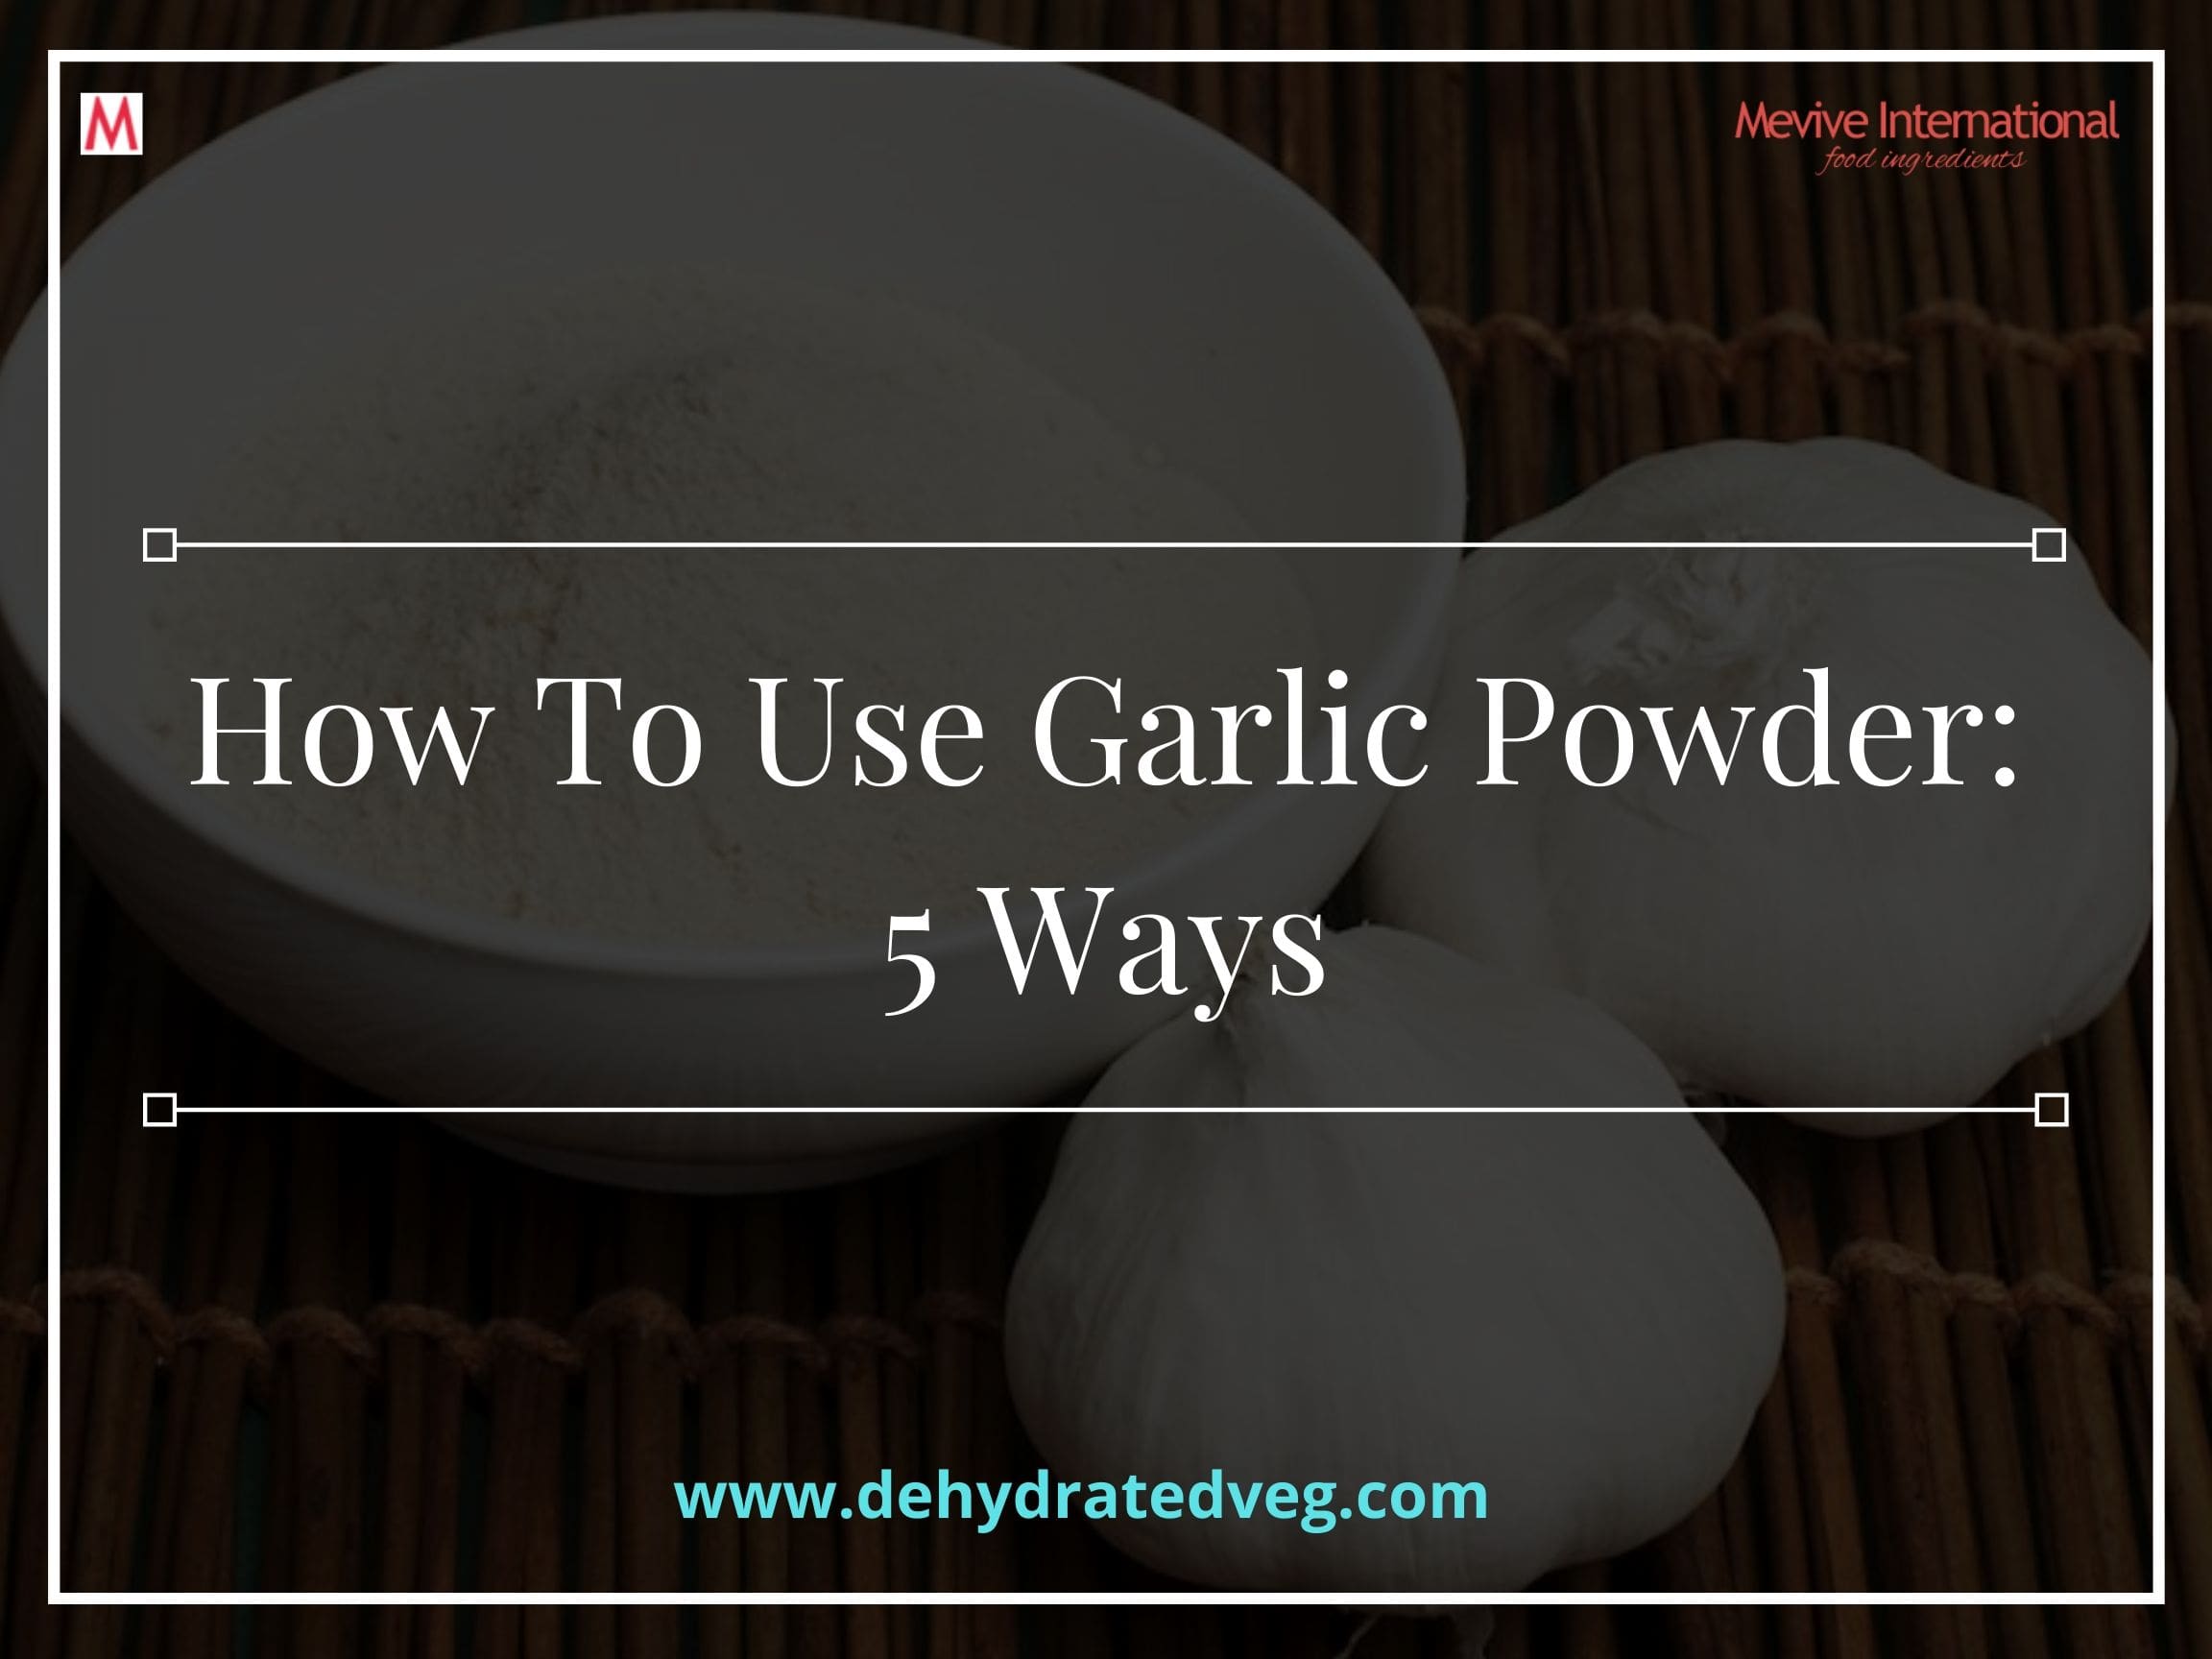 5 Uses of Garlic Powder